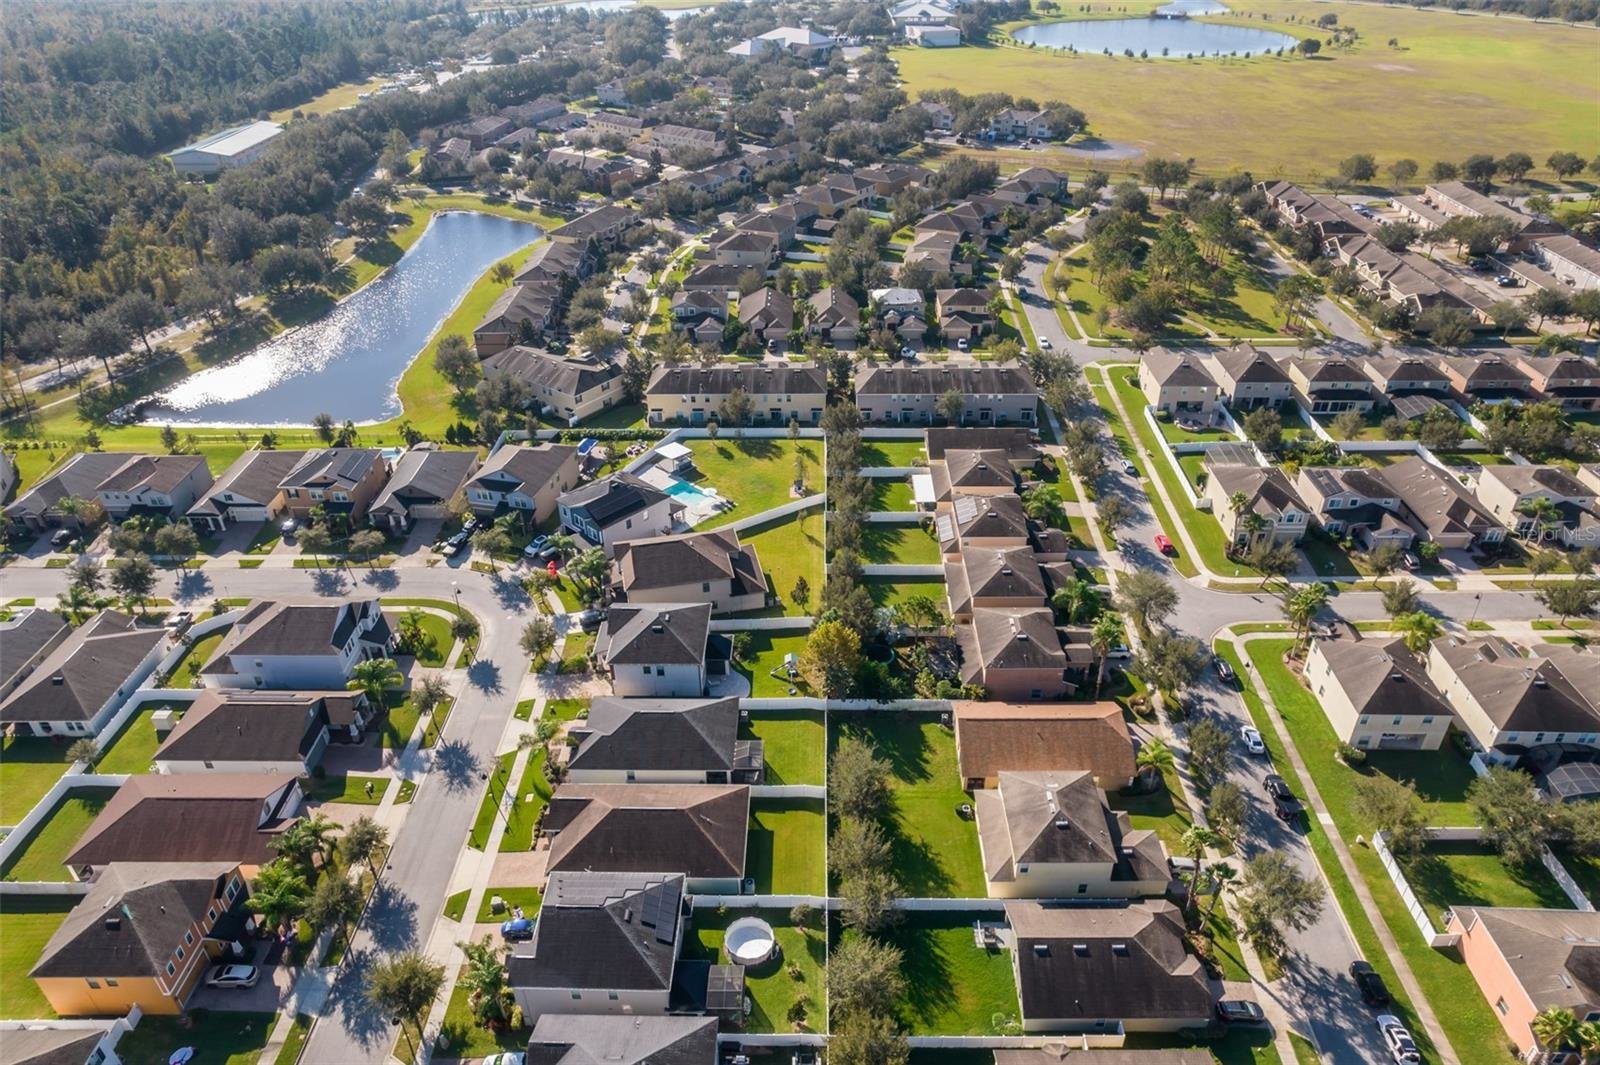 Aerial view over Orlando neighborhood